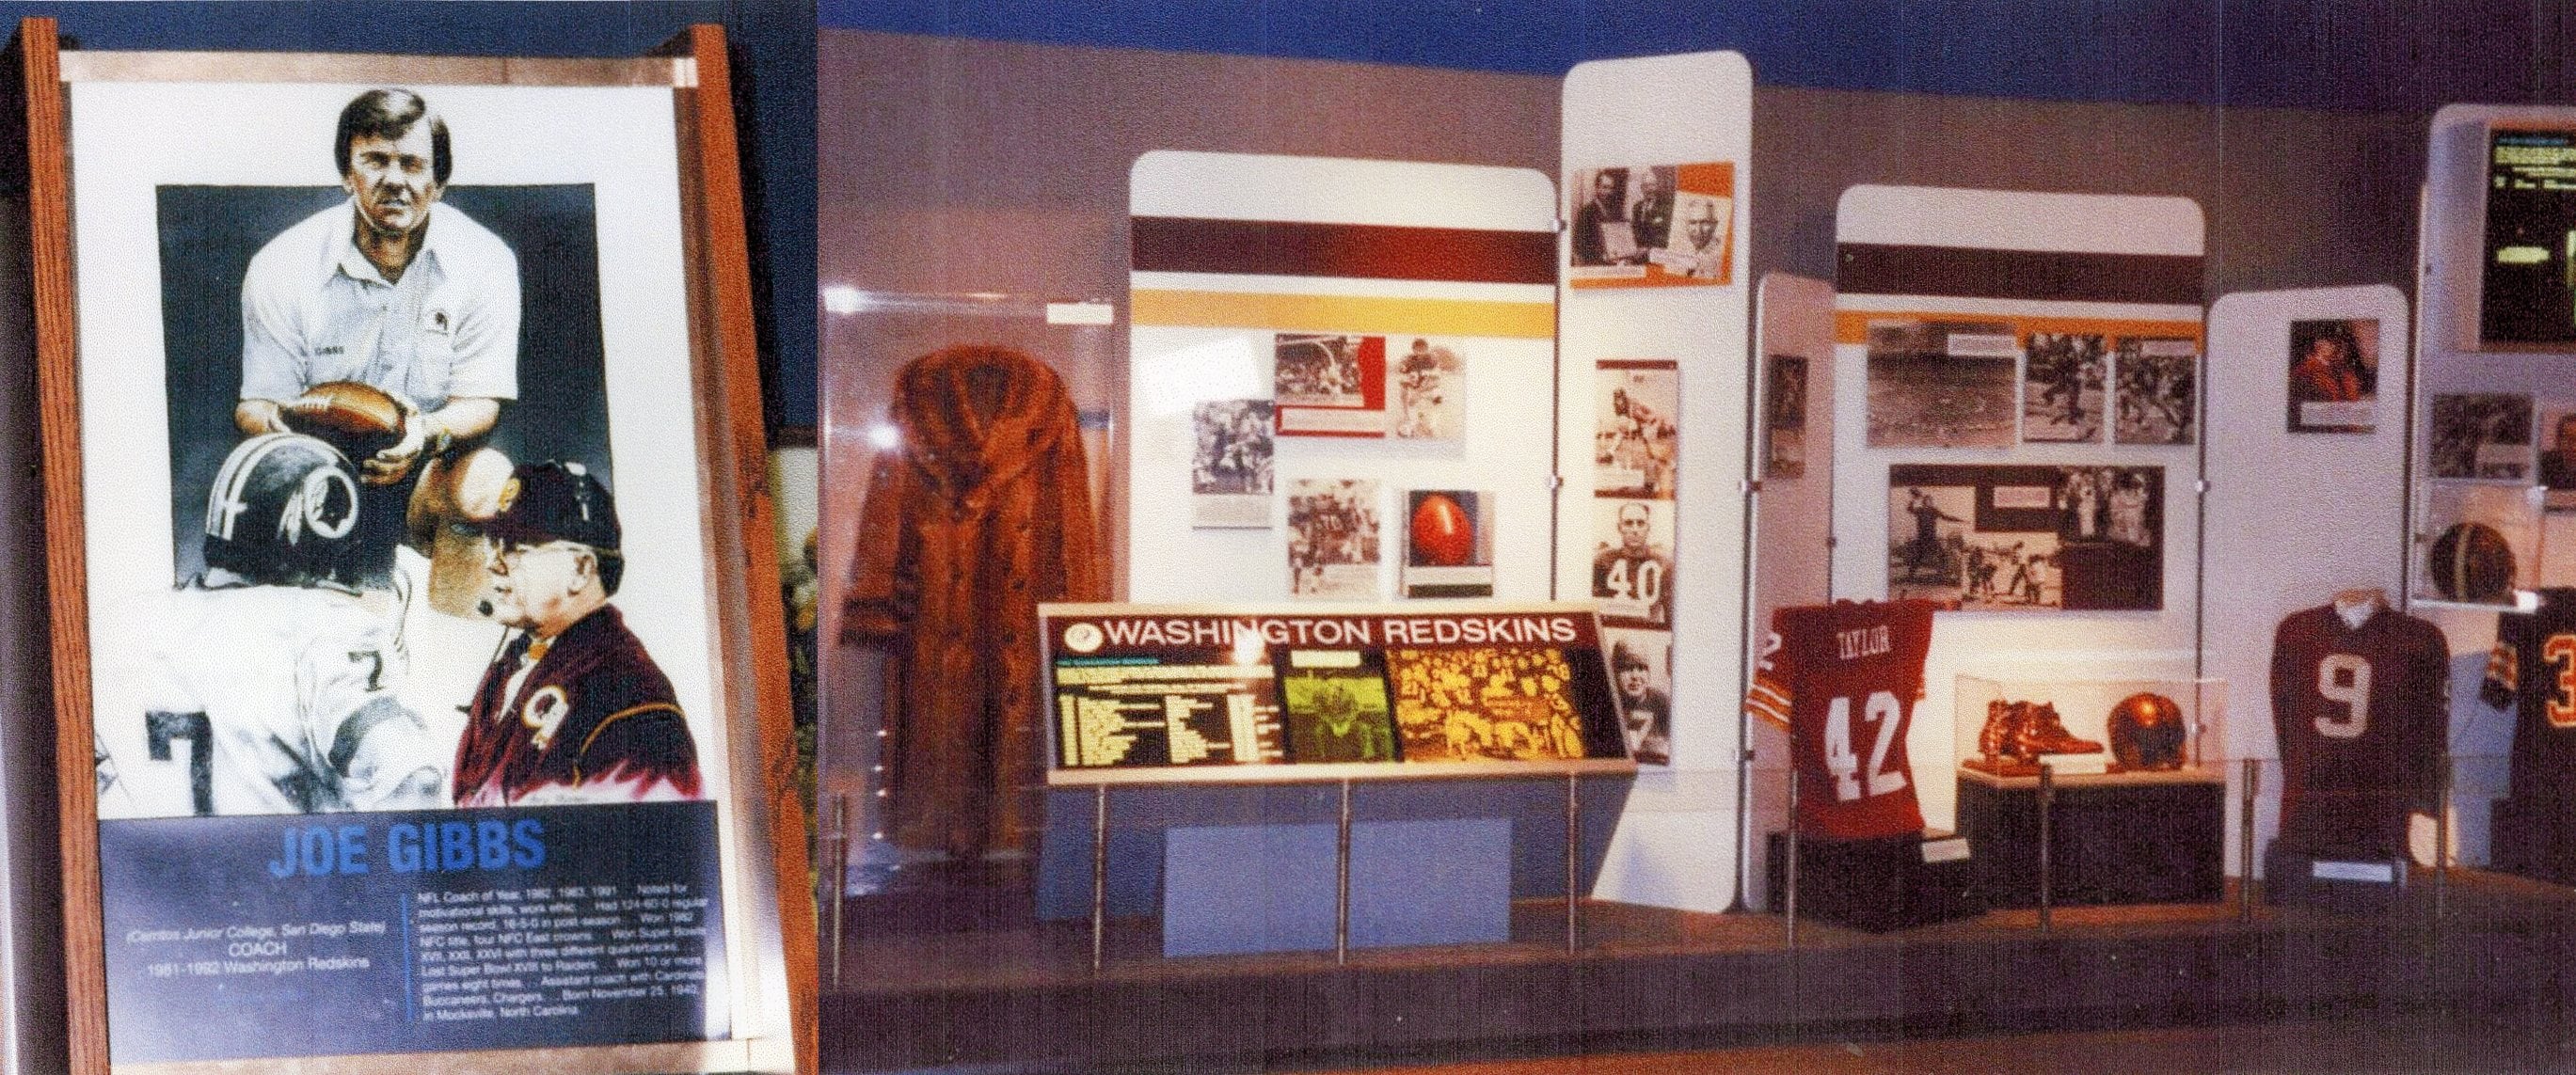 Redskin Displays - Pro Football Hall of Fame, Canton, Ohio